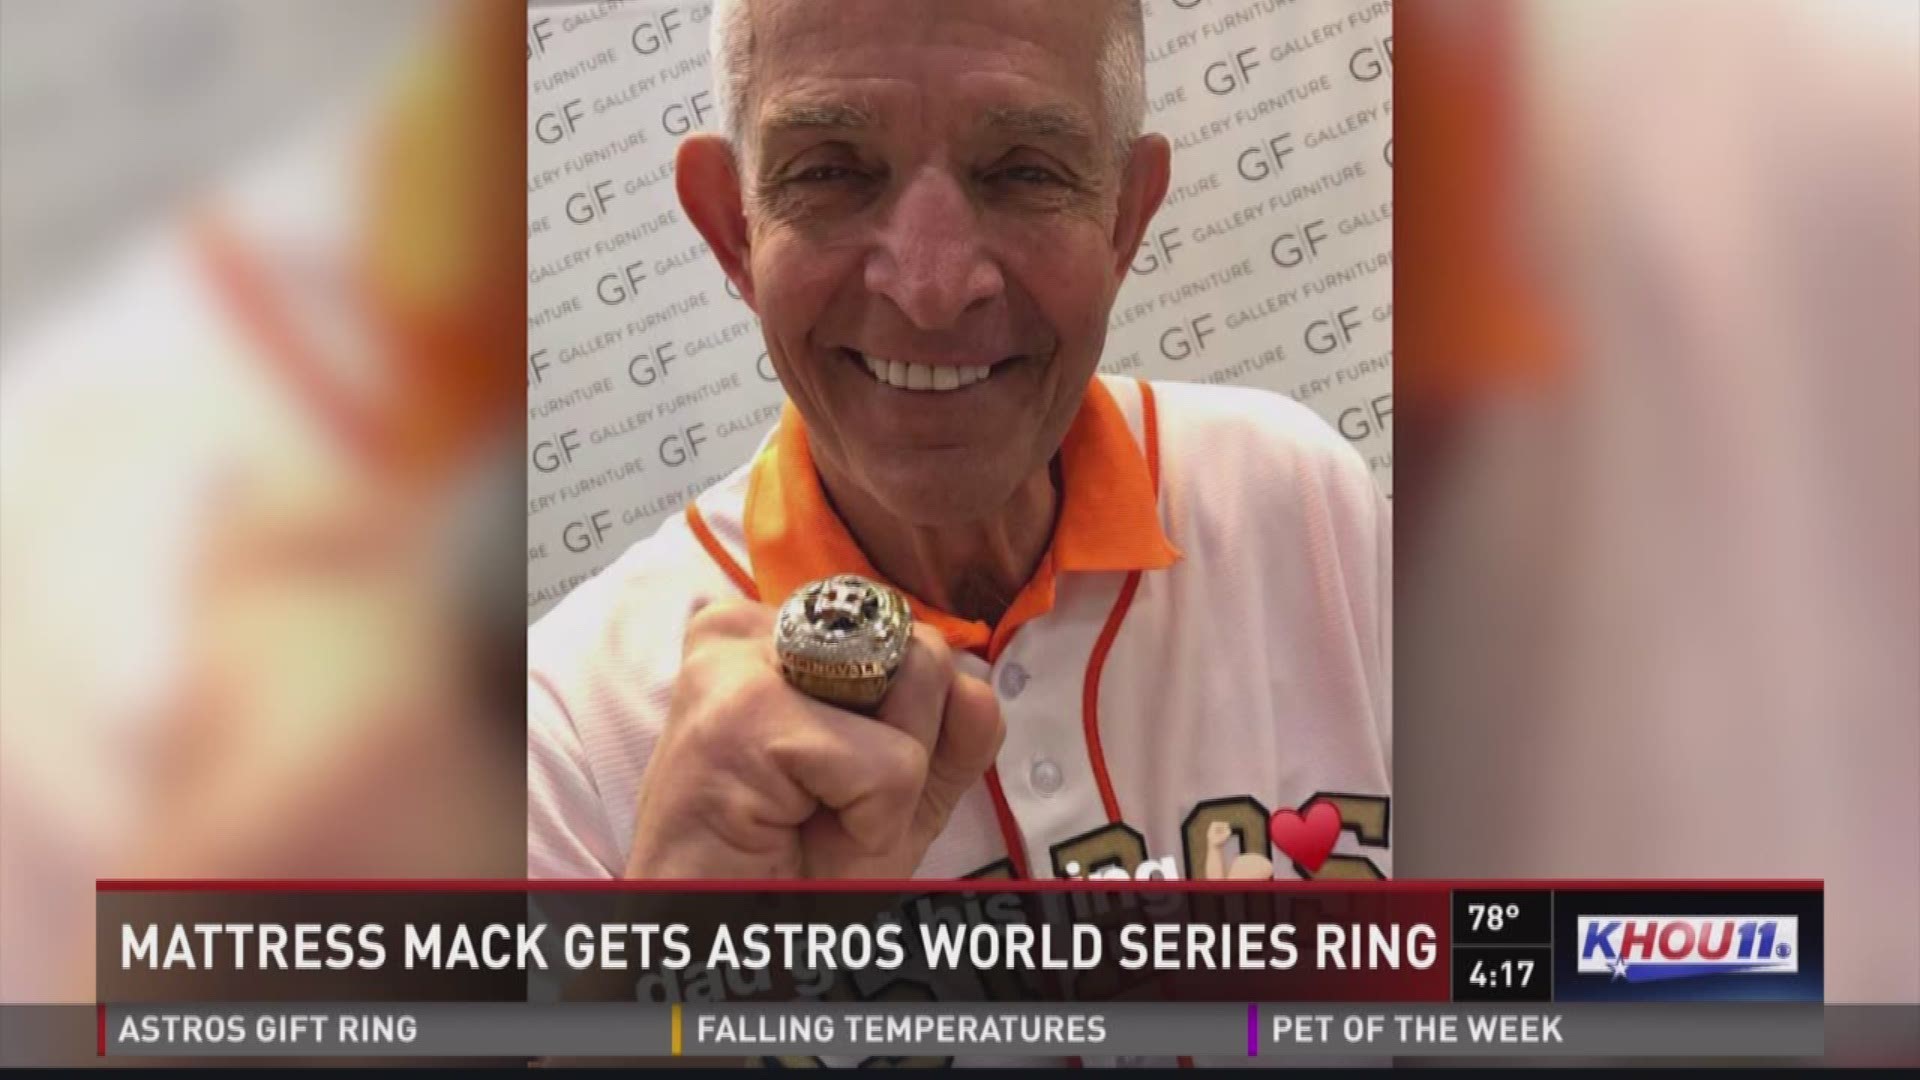 Jim "Mattress Mac" McIngvale received an Astros World Series Championship ring.